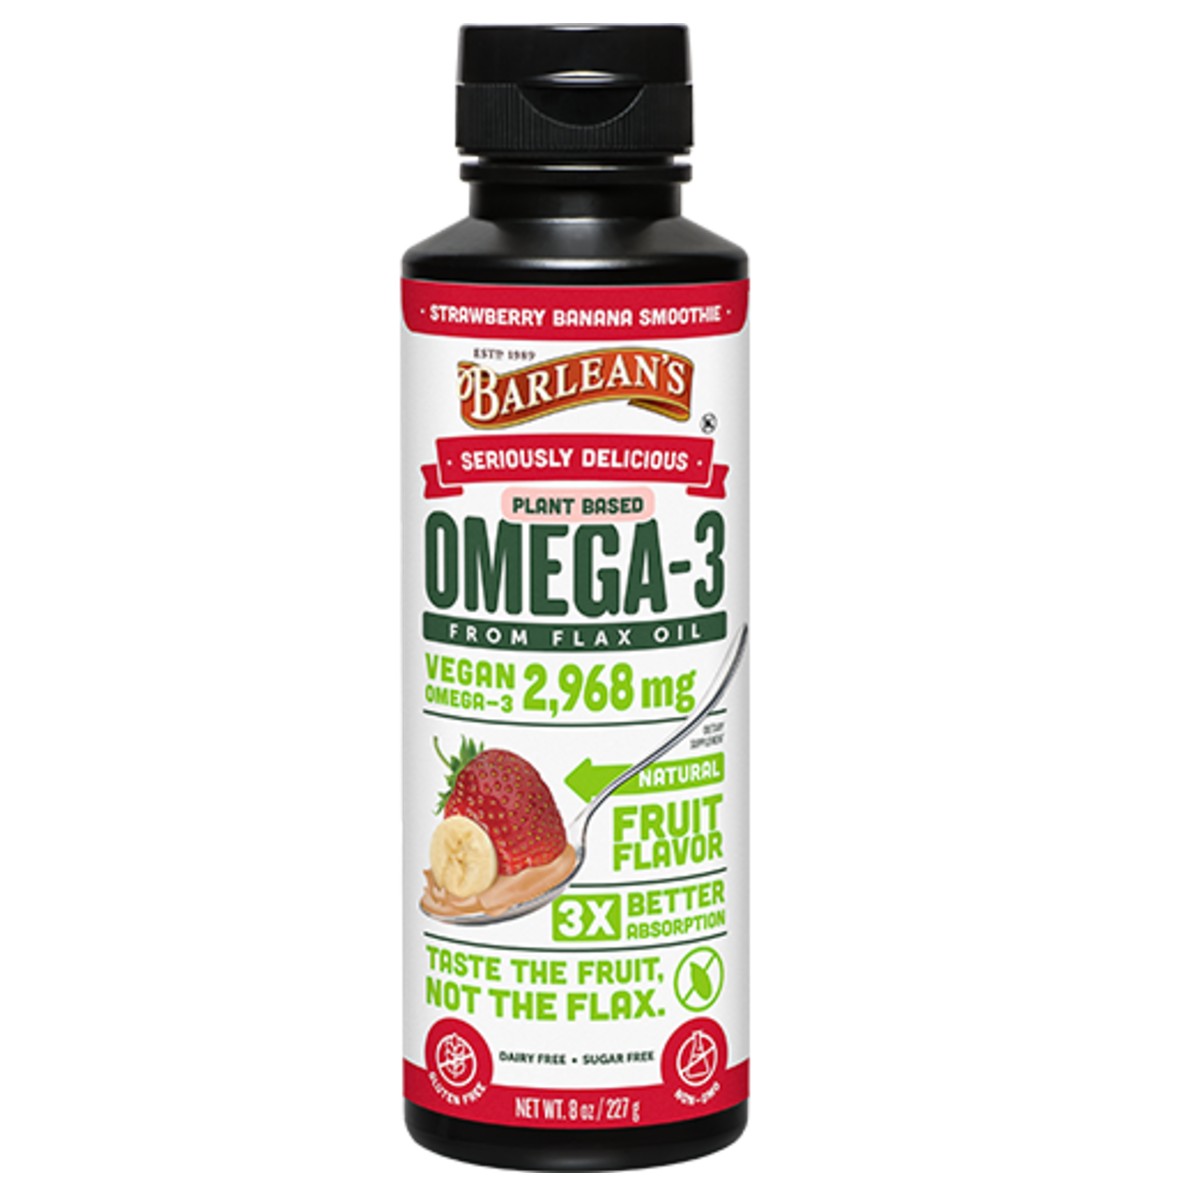 Omega-3 Flax Oil Strawberry Banana Smoothie - Barleans